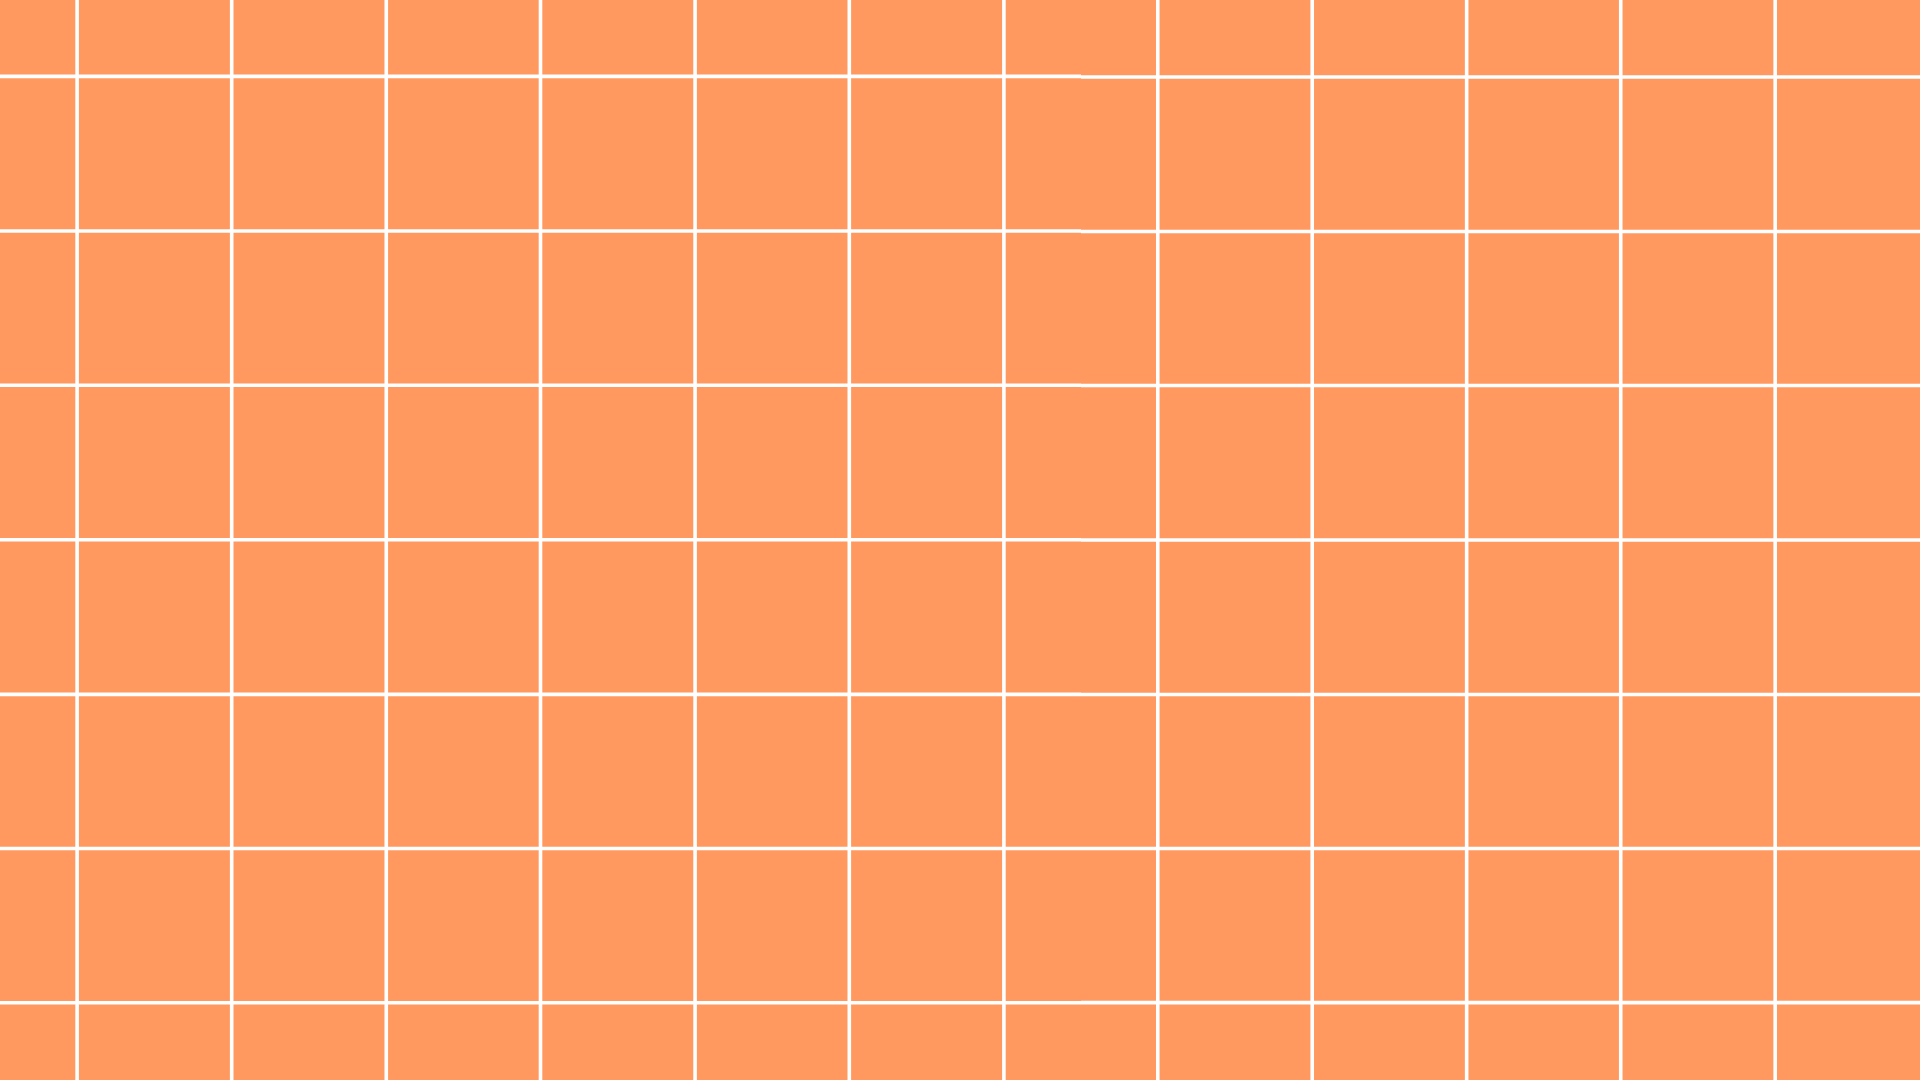 A grid pattern in white on an orange background. - Grid